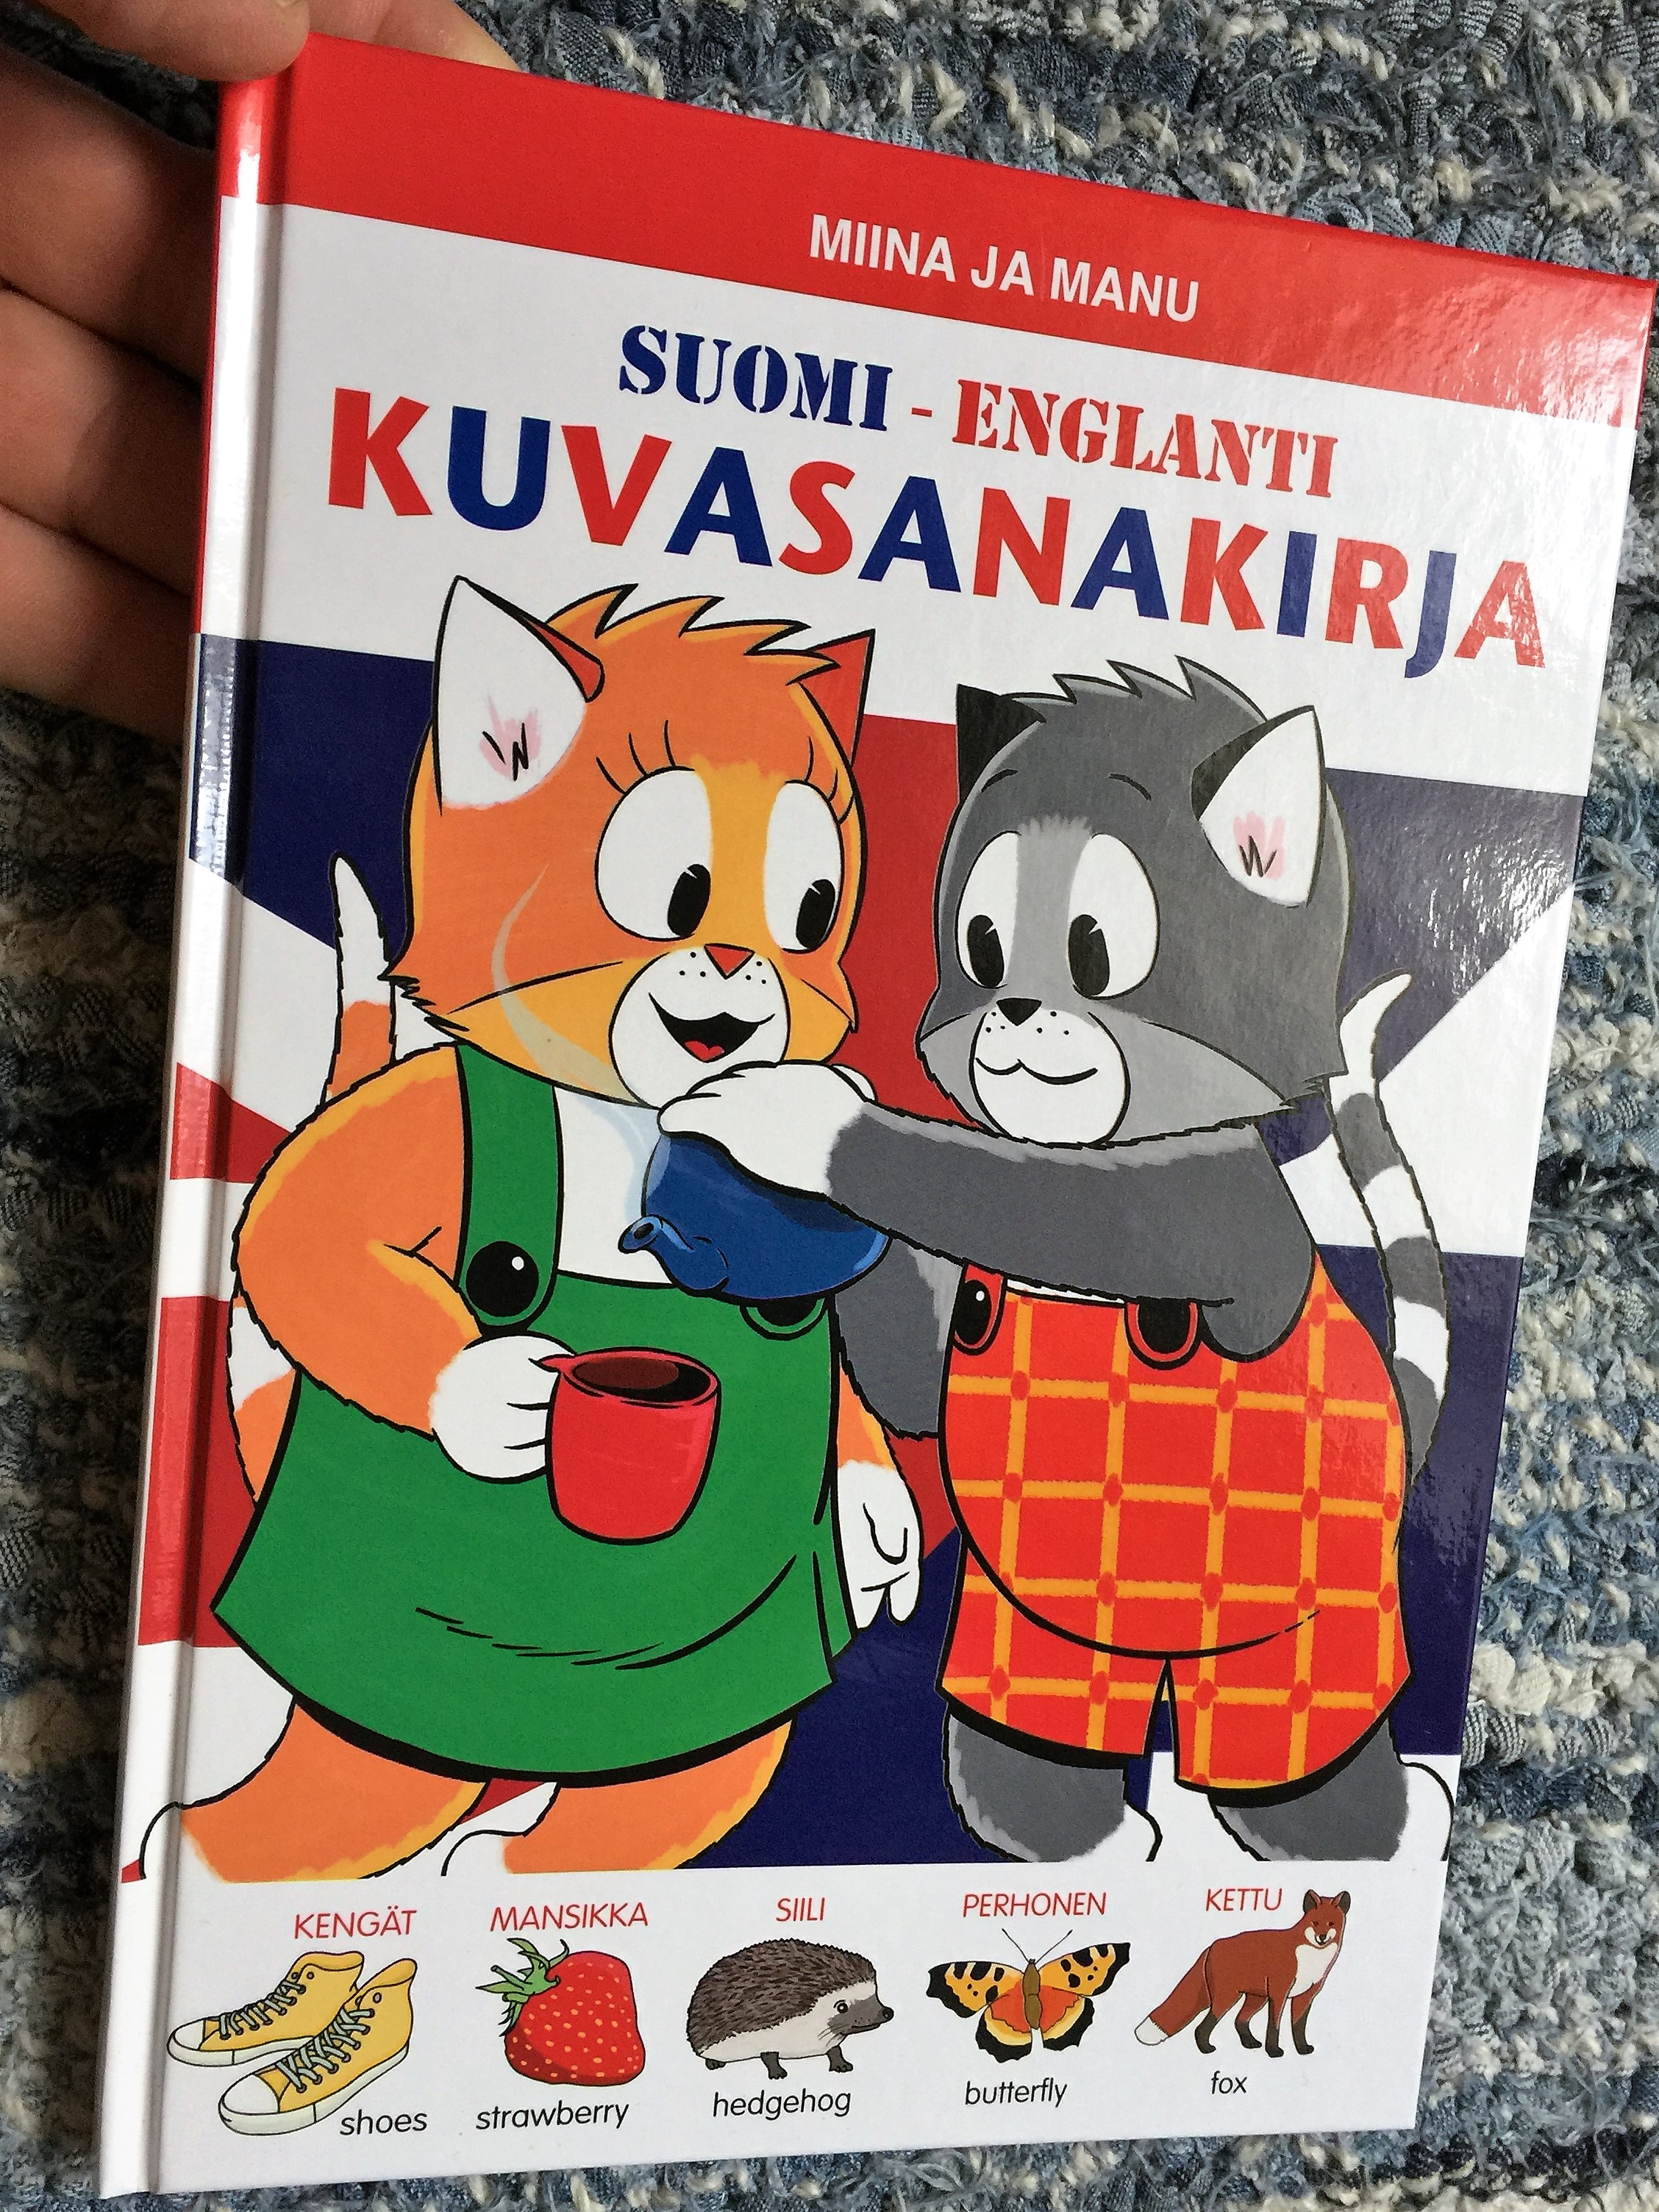 Miina Ja Manu - Suomi - Englanti Kavasanakirja  1